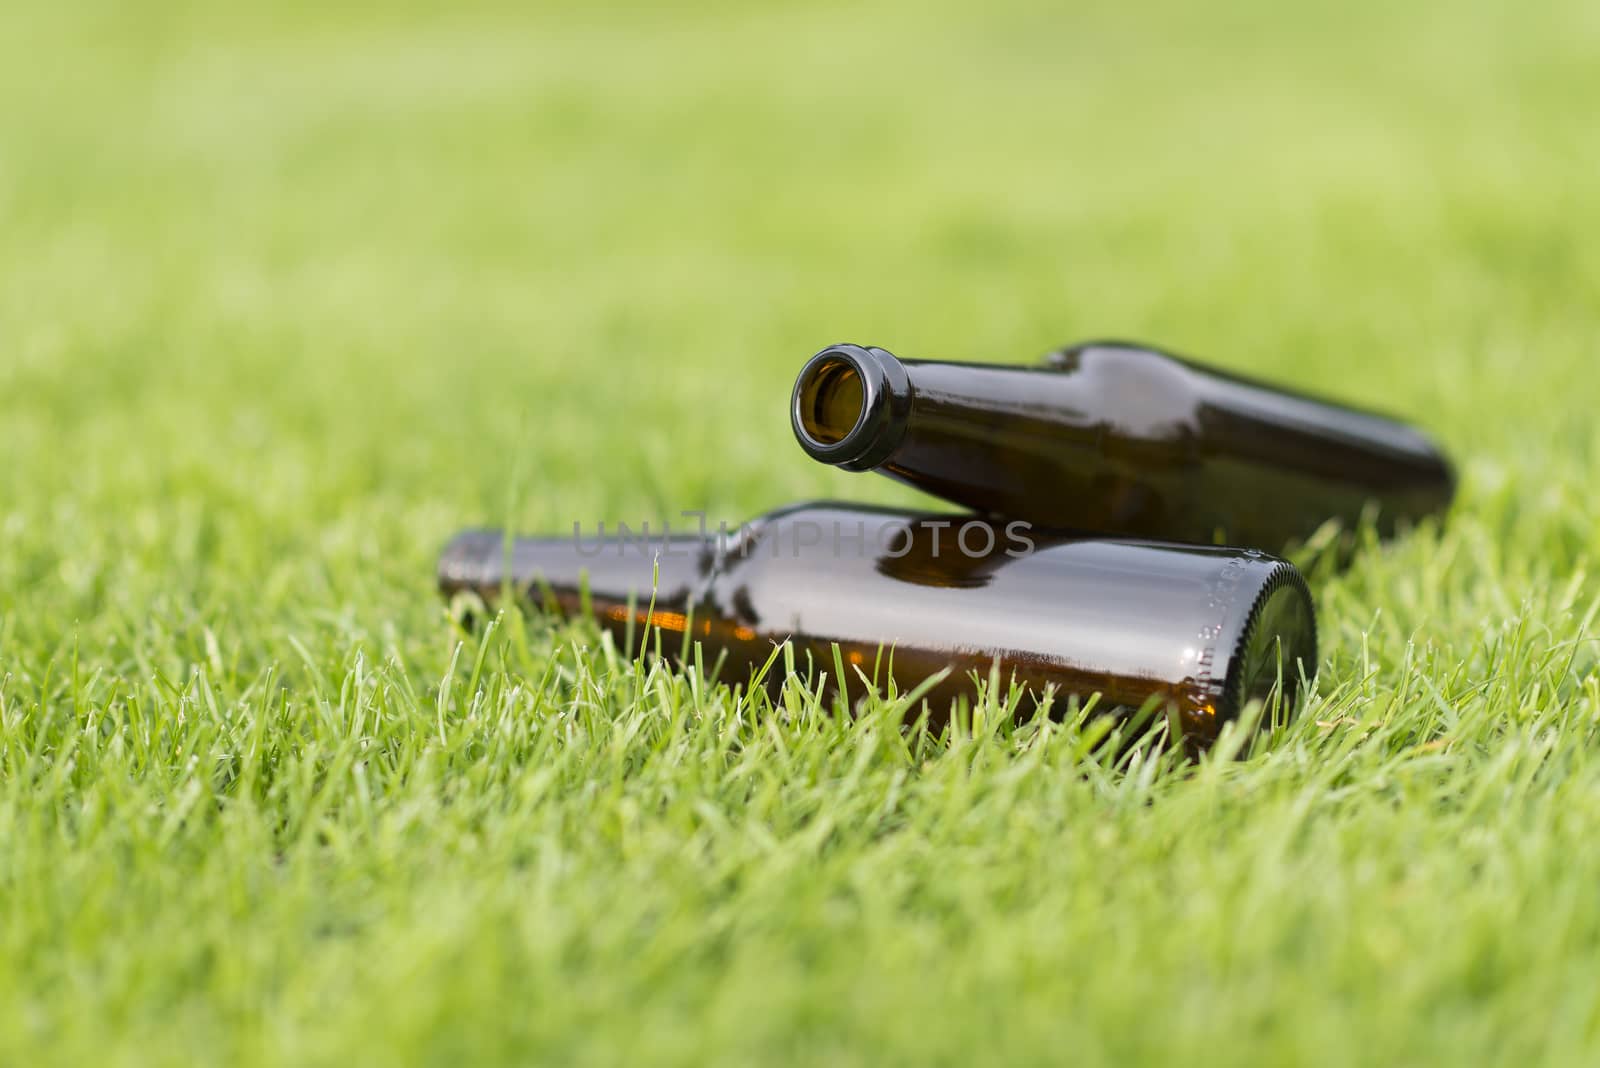 Empty beer bottles in the grass
 by Tofotografie